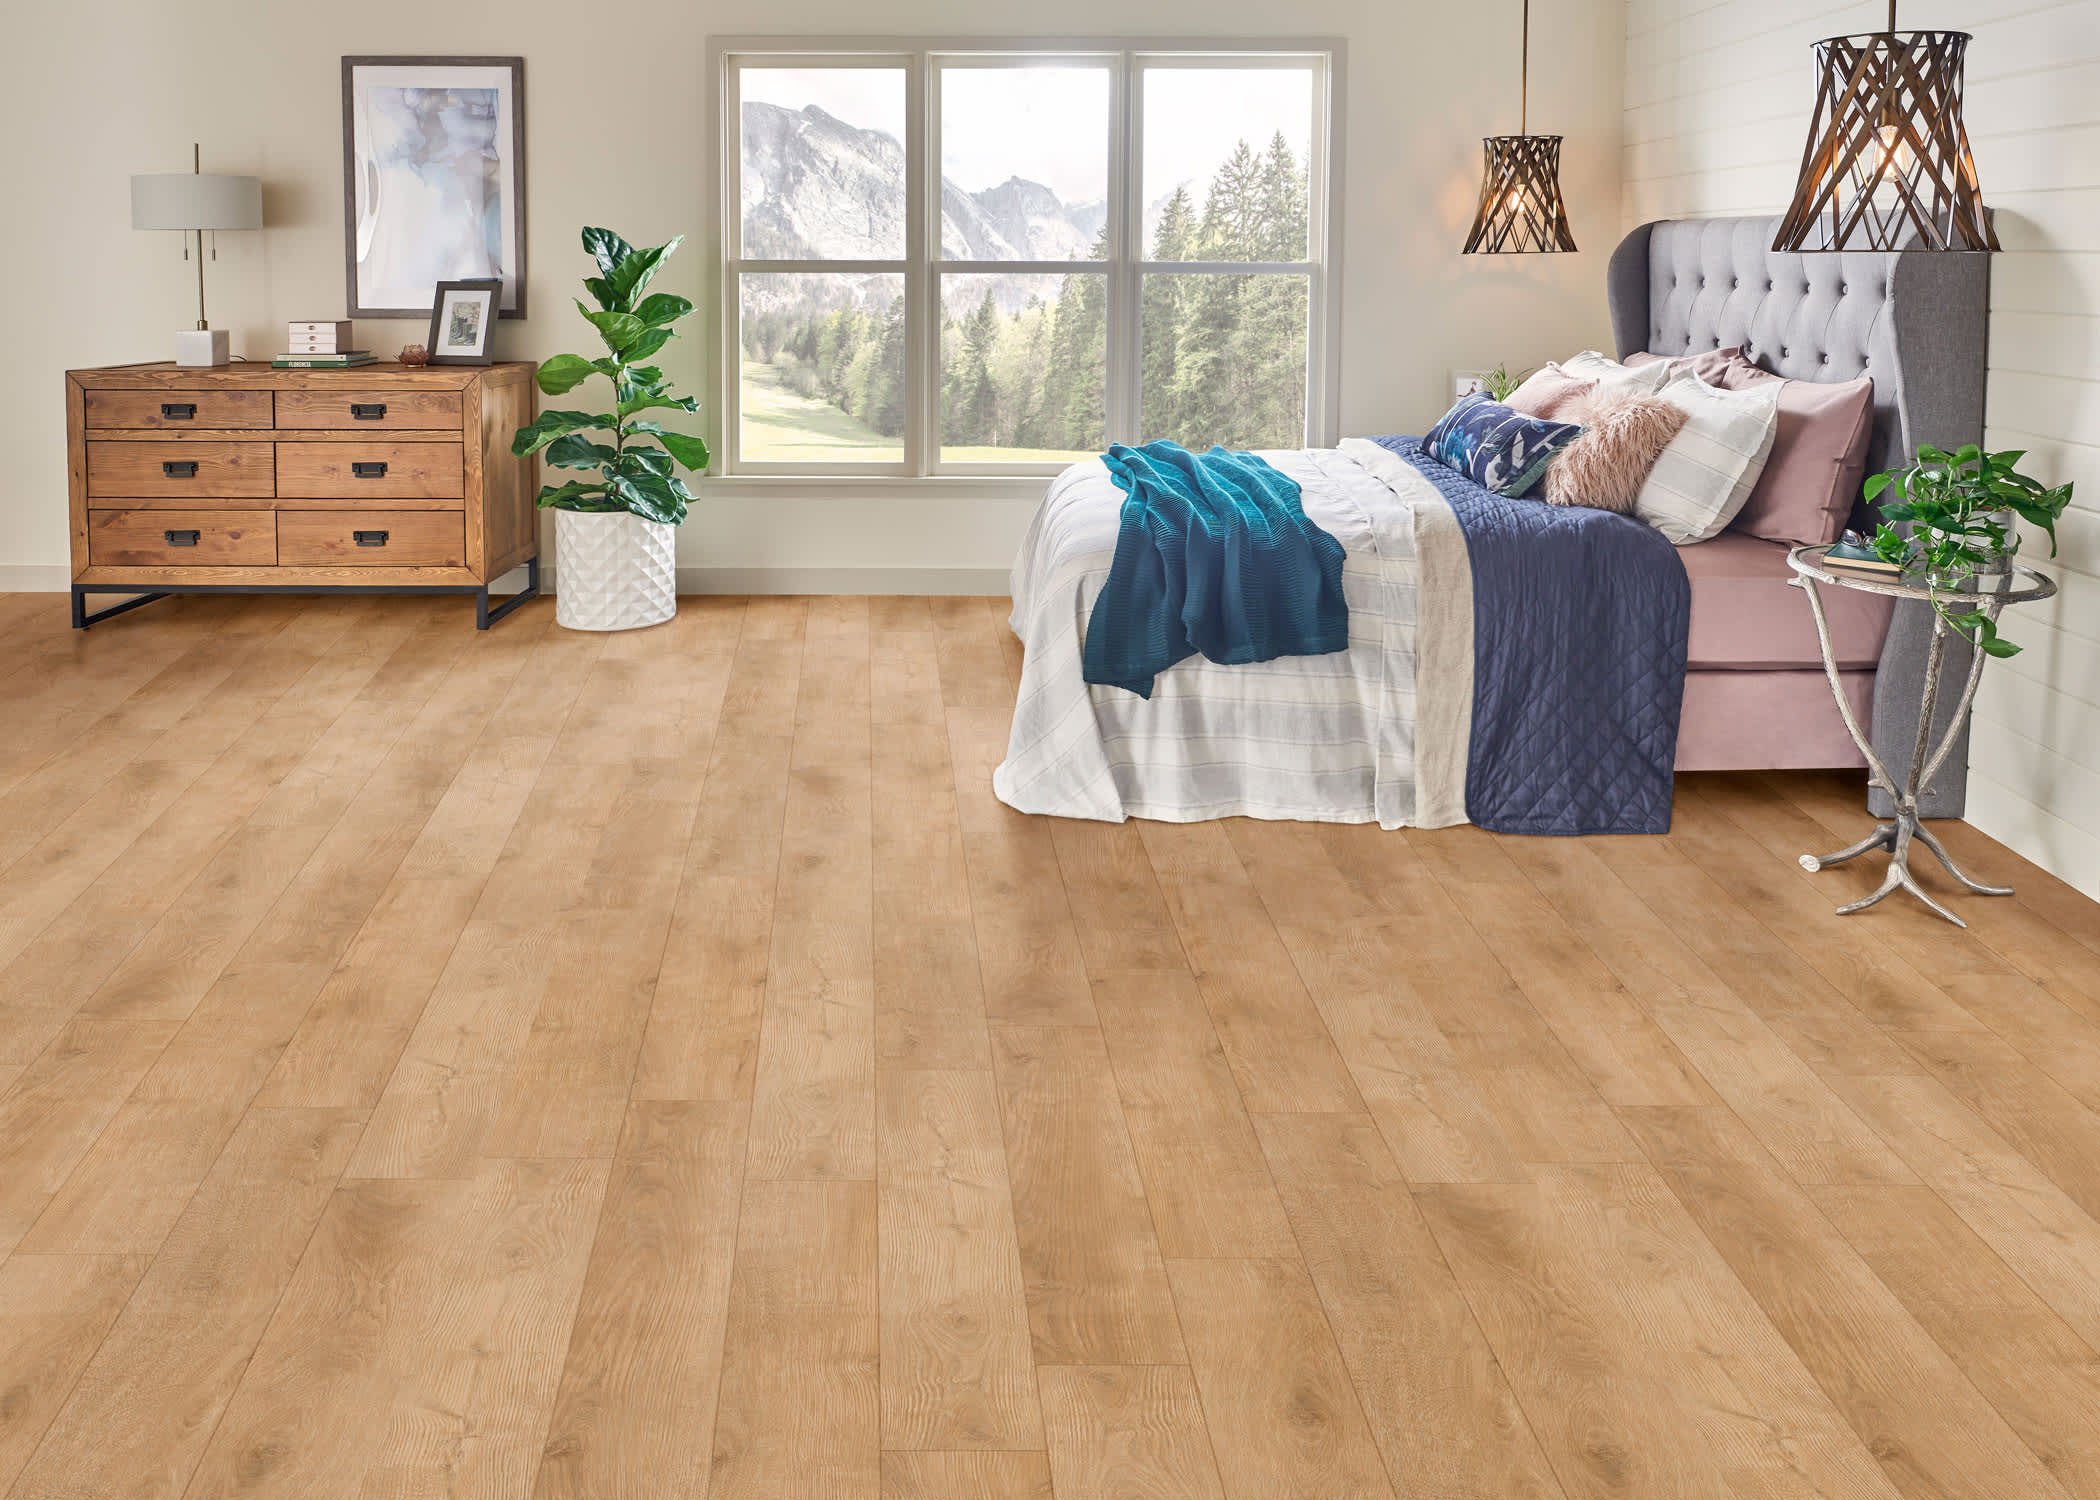 blonde waterproof rigid vinyl plank floor in bedroom with gray velvet headboard and pink and turquoise bedding plus wood dresser with large green plant on floor